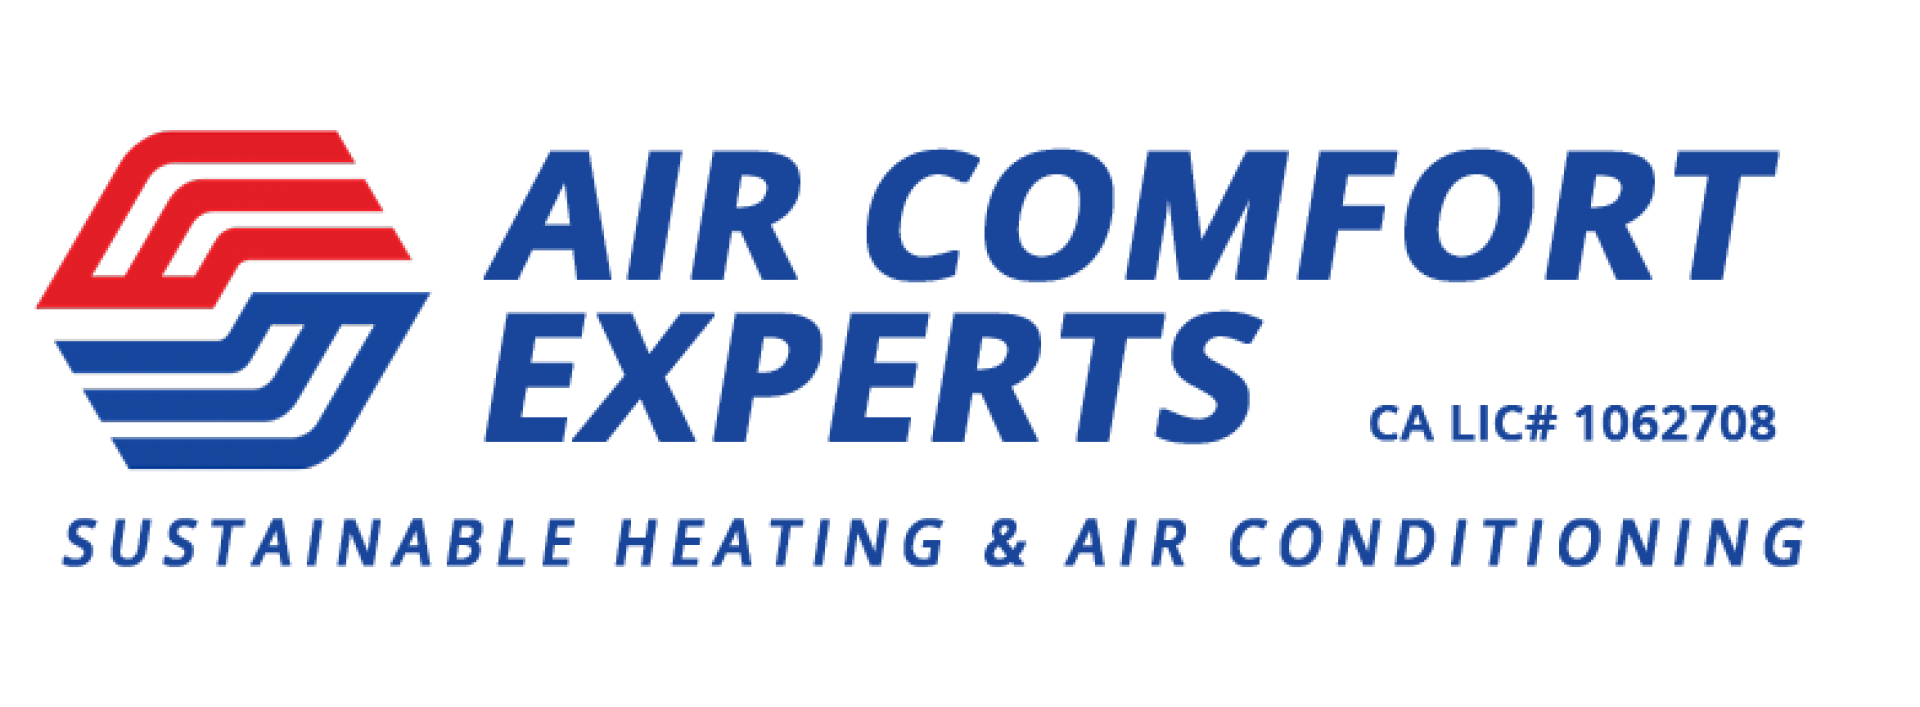 Air Comfort Experts company logo